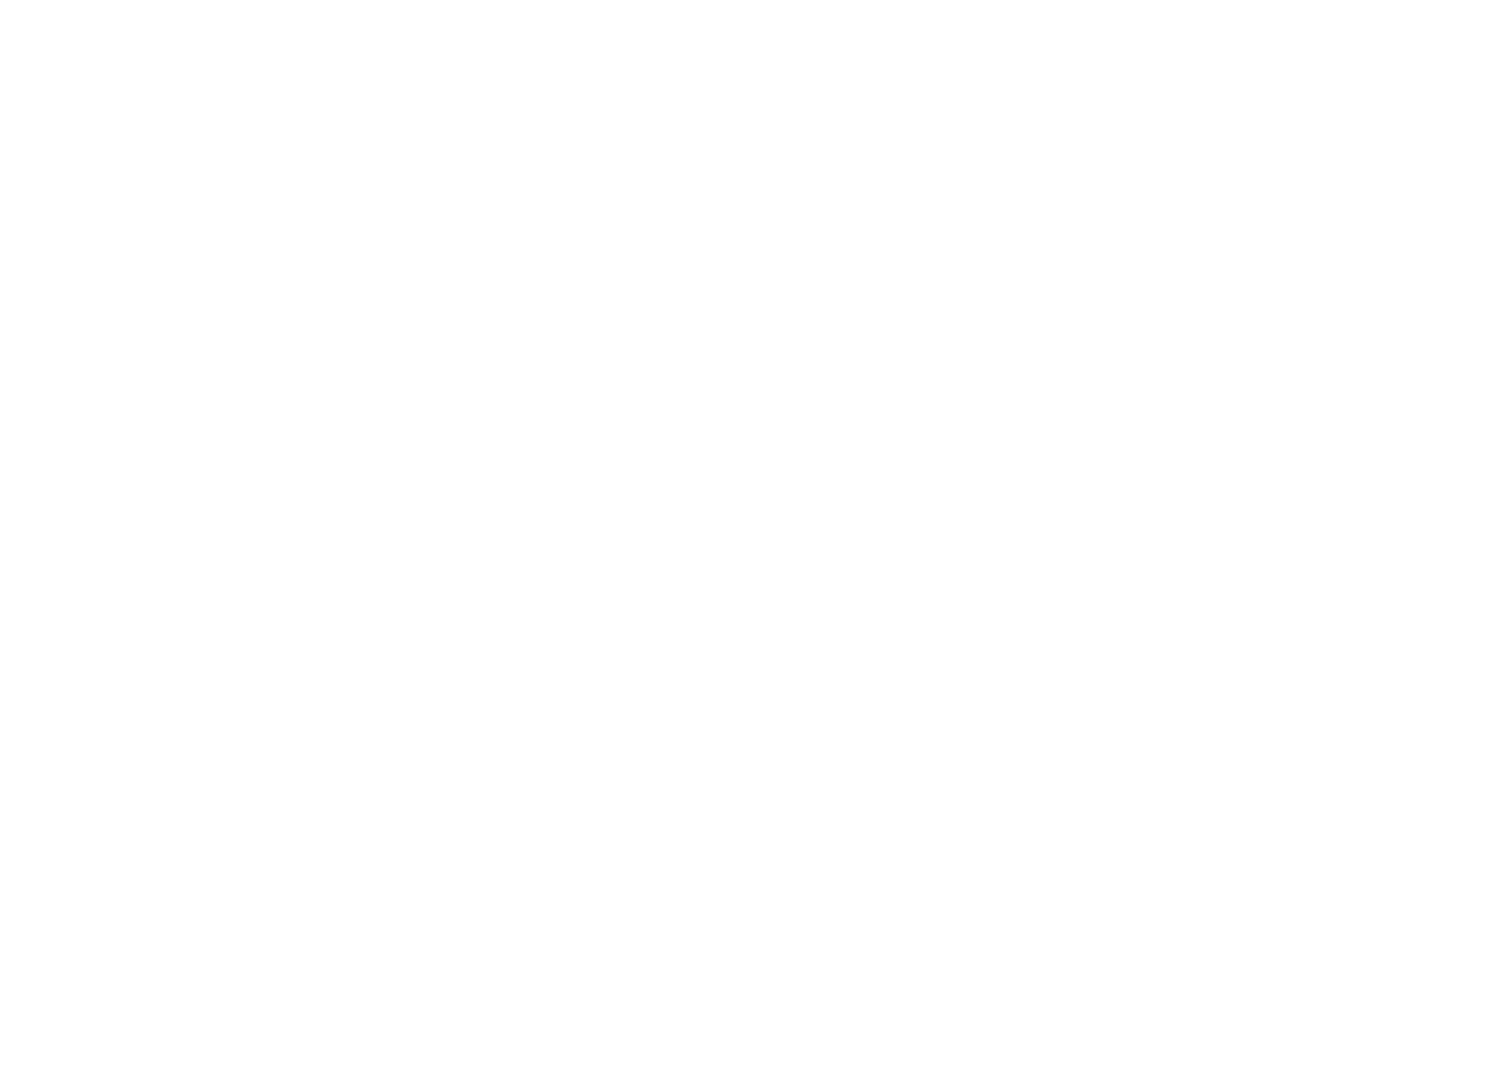 MARK BAKLEY